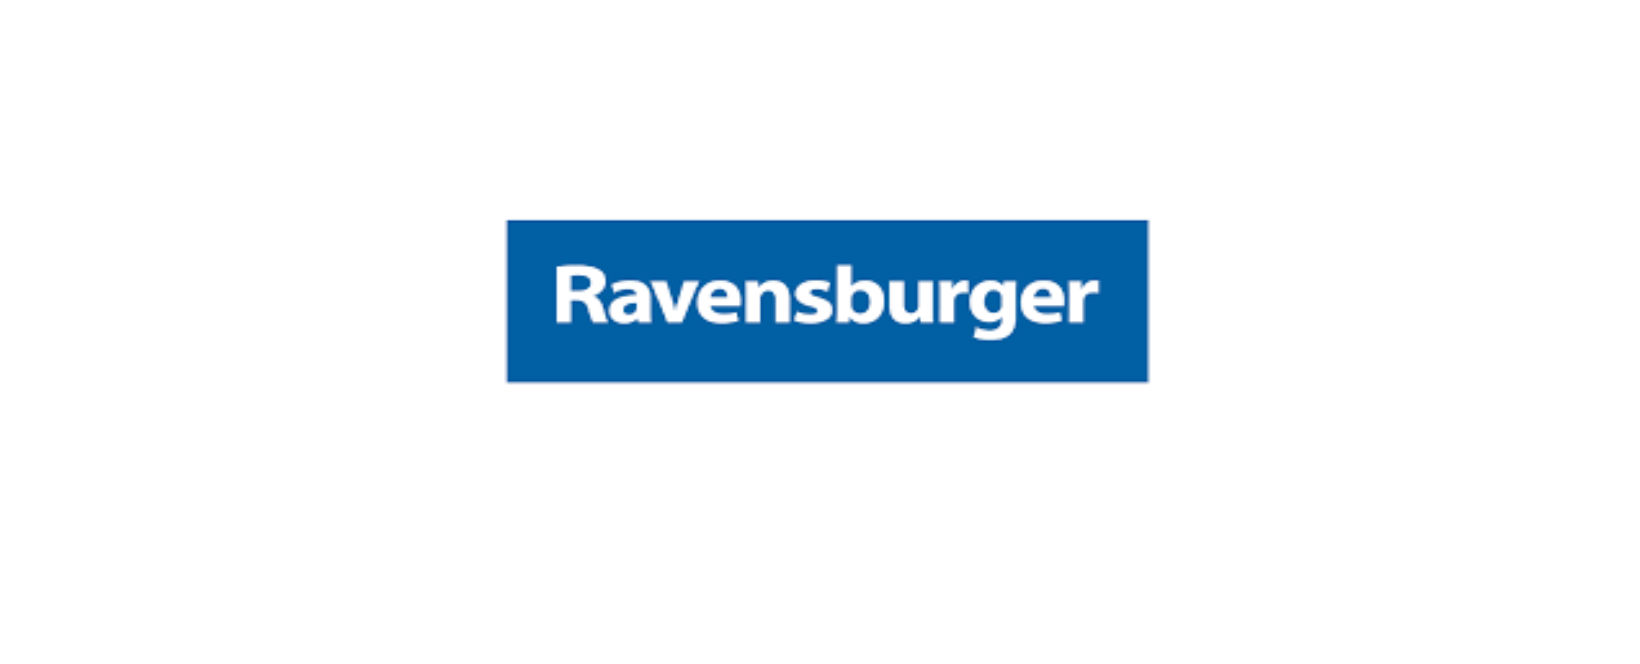 Ravensburger Discount Codes 2022